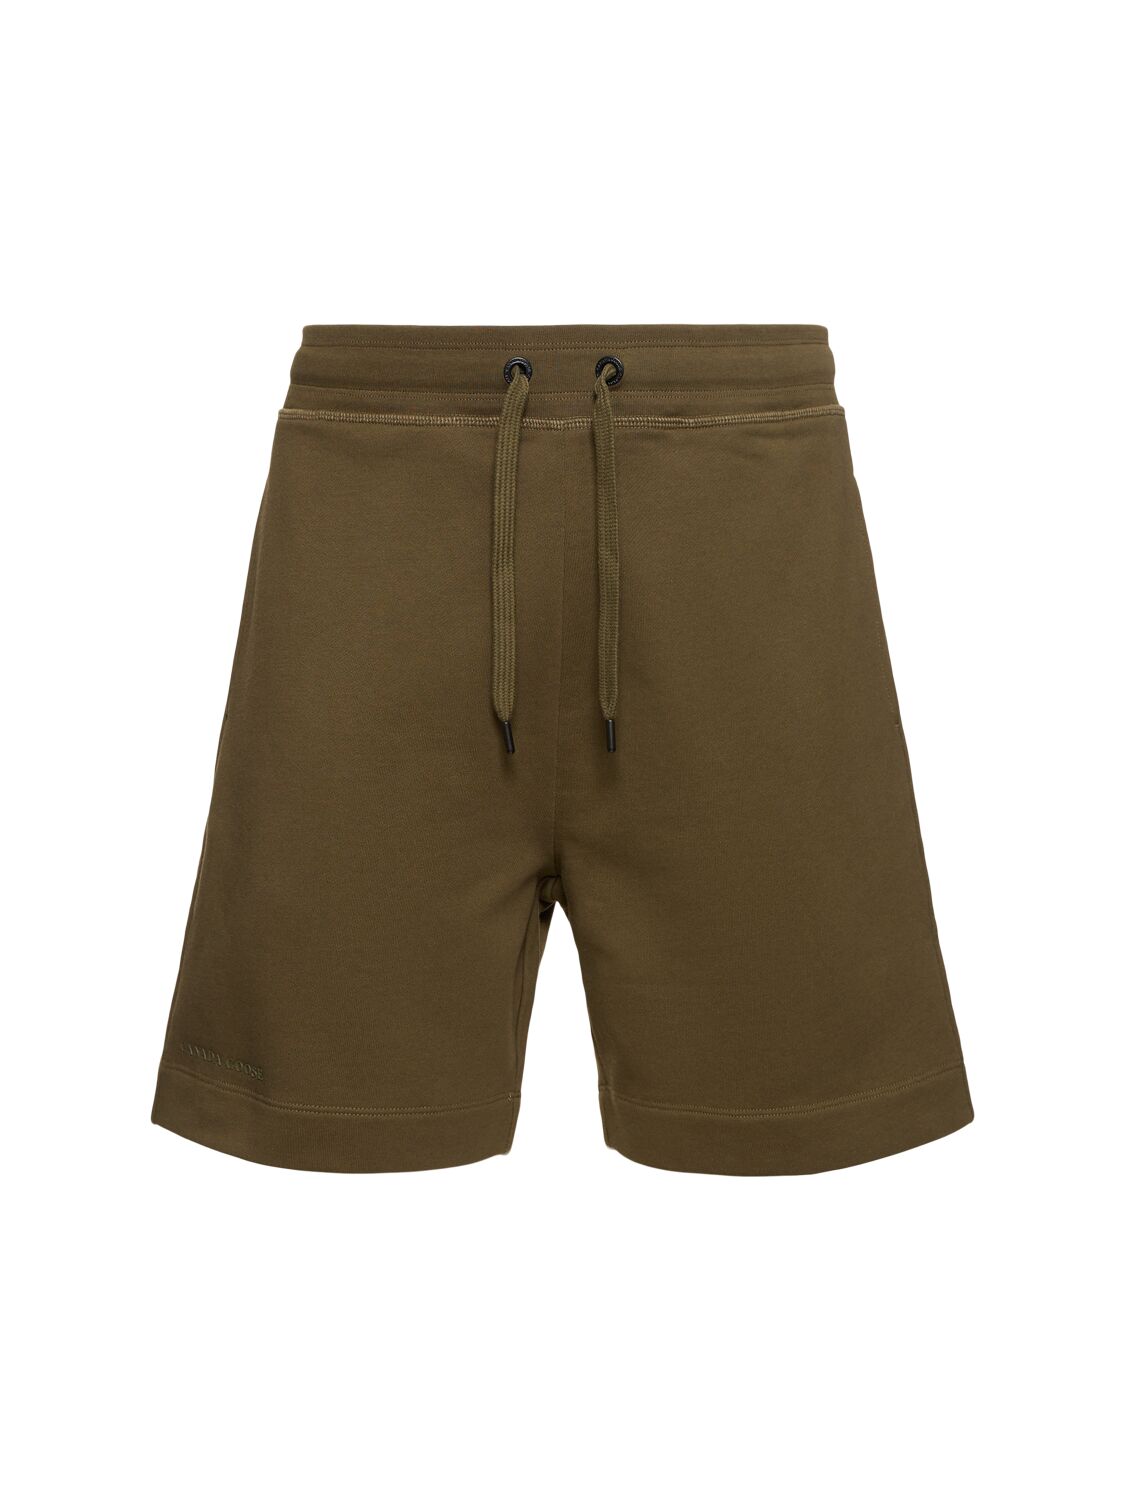 Image of Huron Cotton Shorts